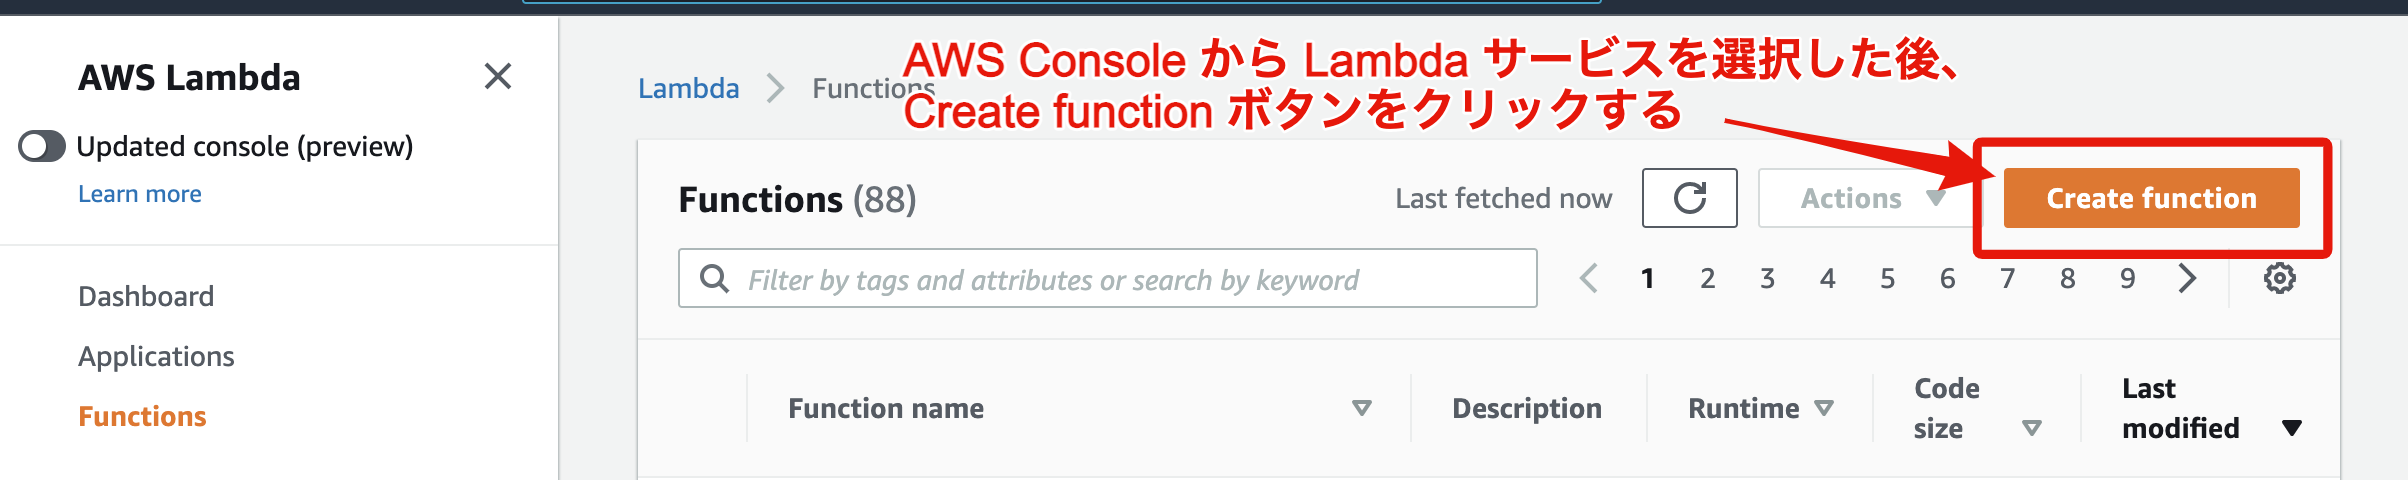 AWS Lambda のトップ画面から関数を新たに作成する